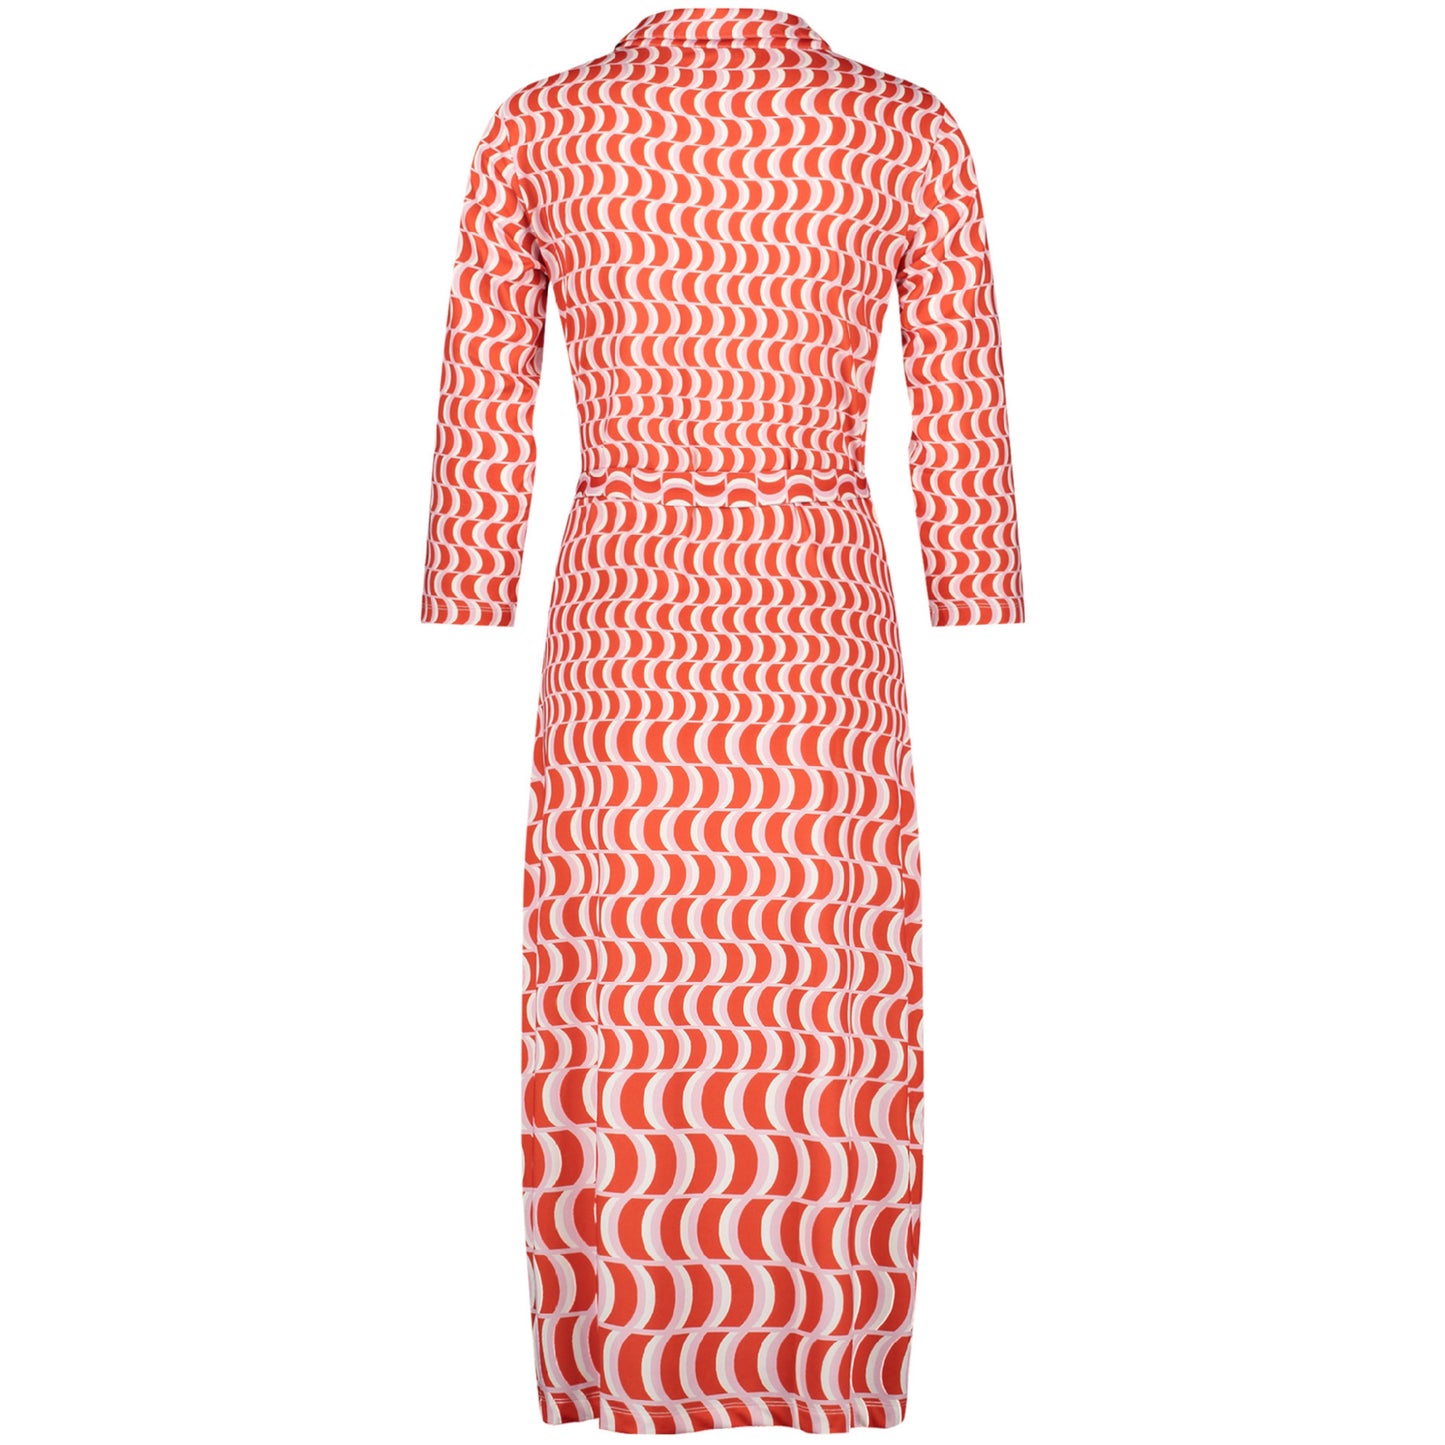 Gerry Weber 180028 35026 9069 Ecru/White/Red/Orange Print Knitted Dress